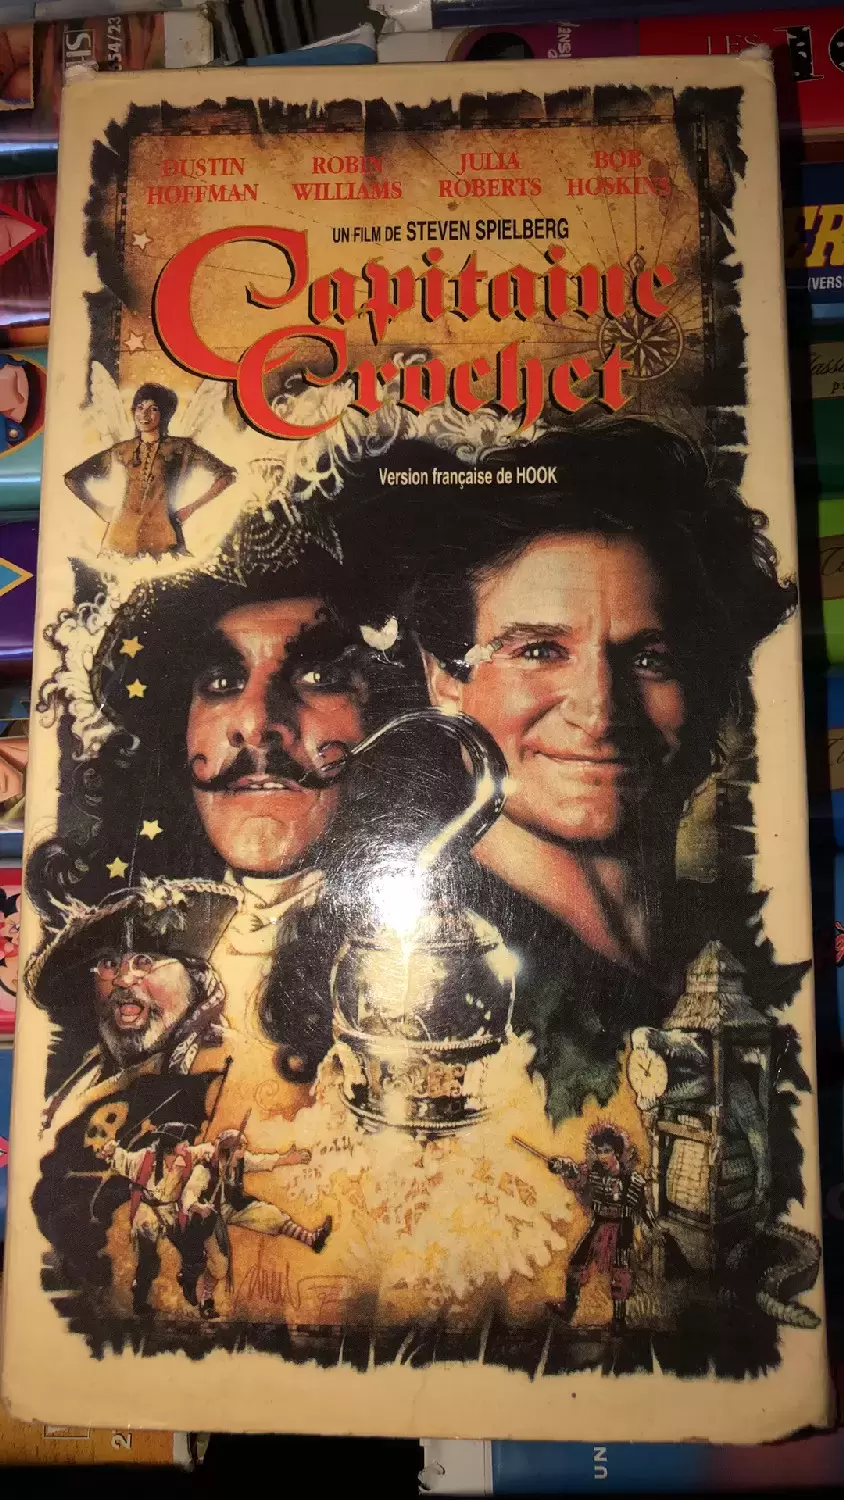 VHS - Capitaine Crochet